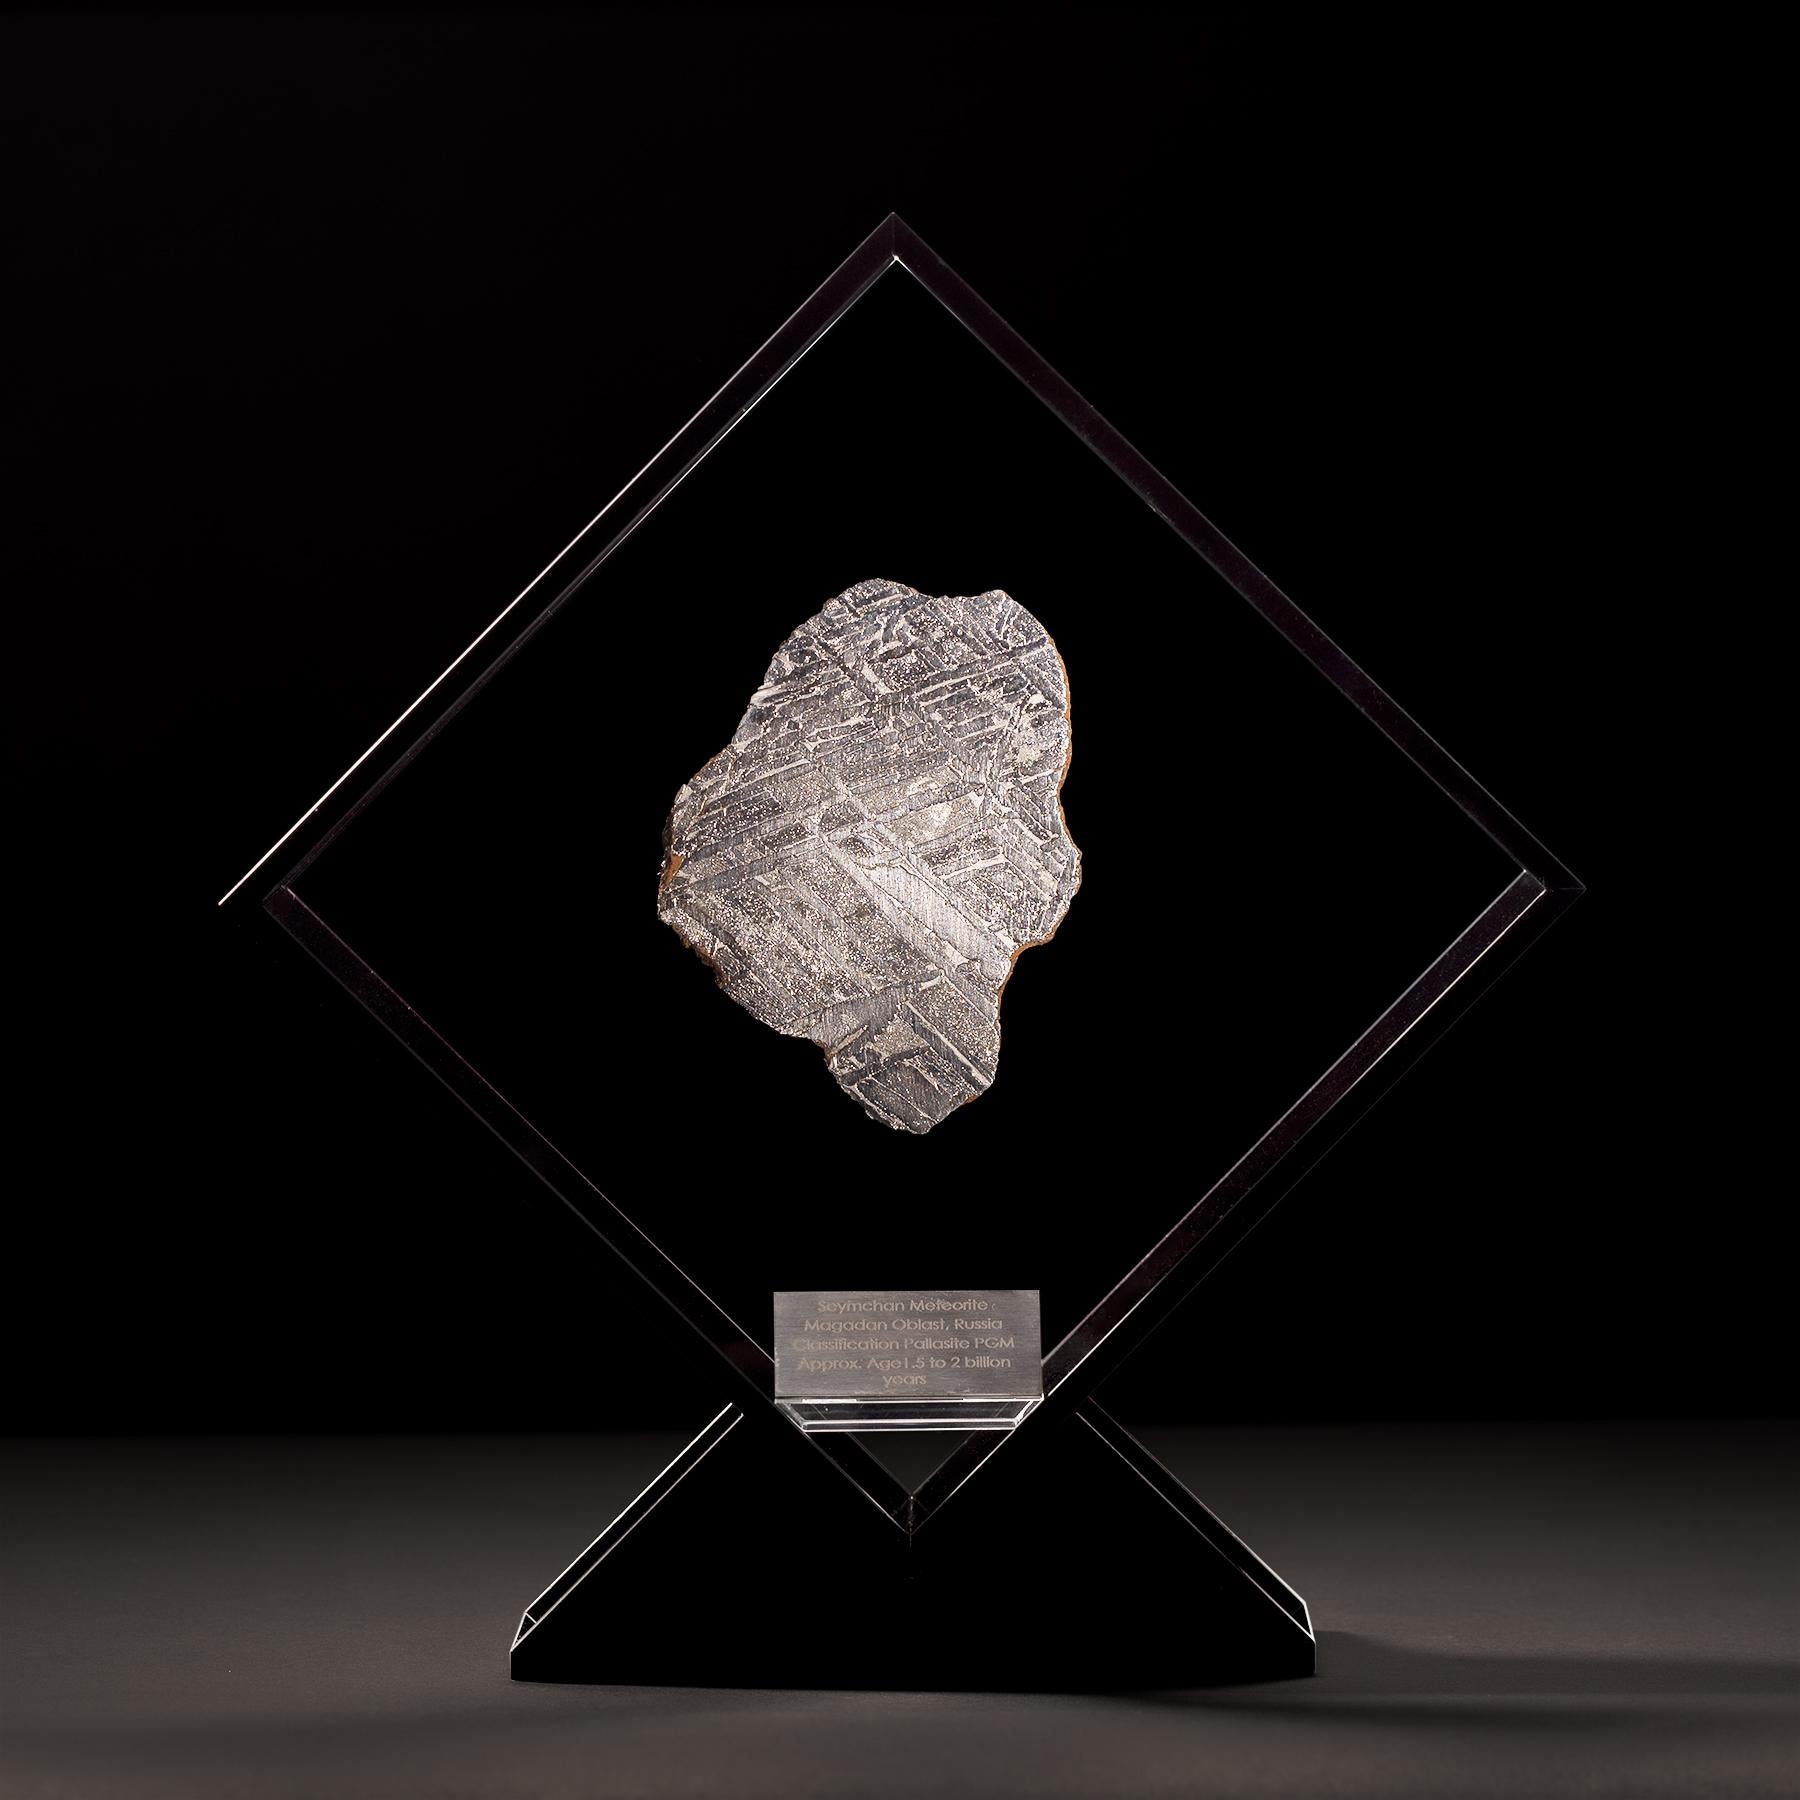 Organic Modern Original Design, Seymchan Meteorite in a Black Acrylic Display